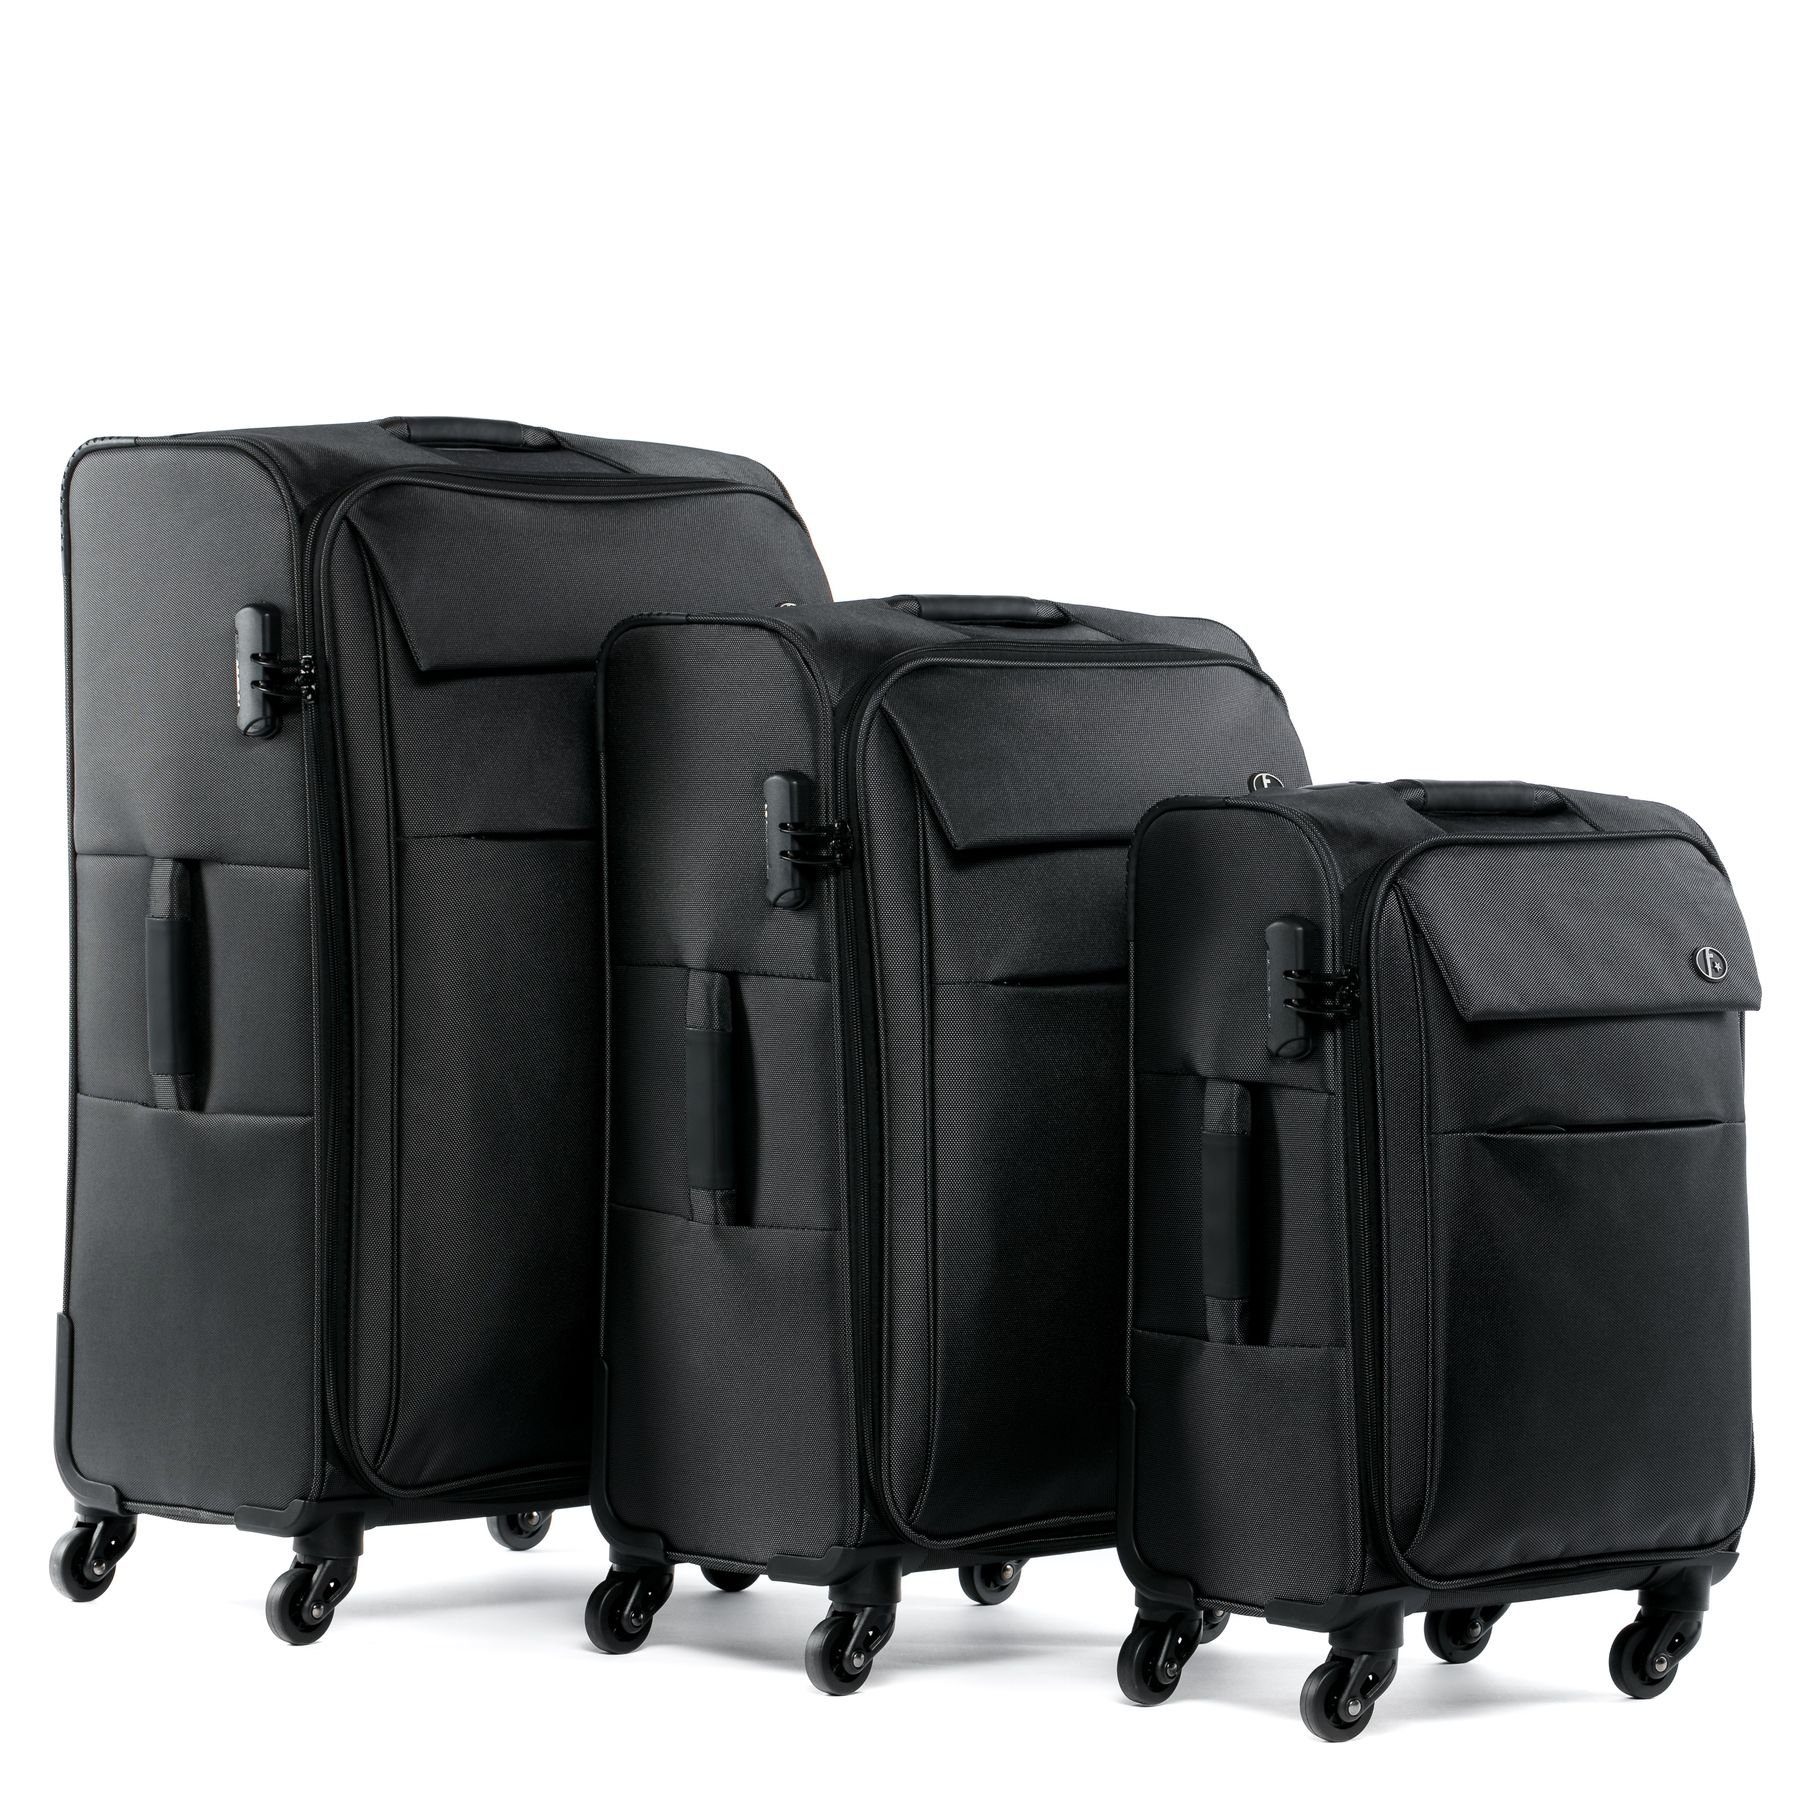 FERGÉ Kofferset 3 teilig Weichschale Calais, Trolley 3er Koffer Set, Reisekoffer 4 Rollen, Premium Rollkoffer schwarz